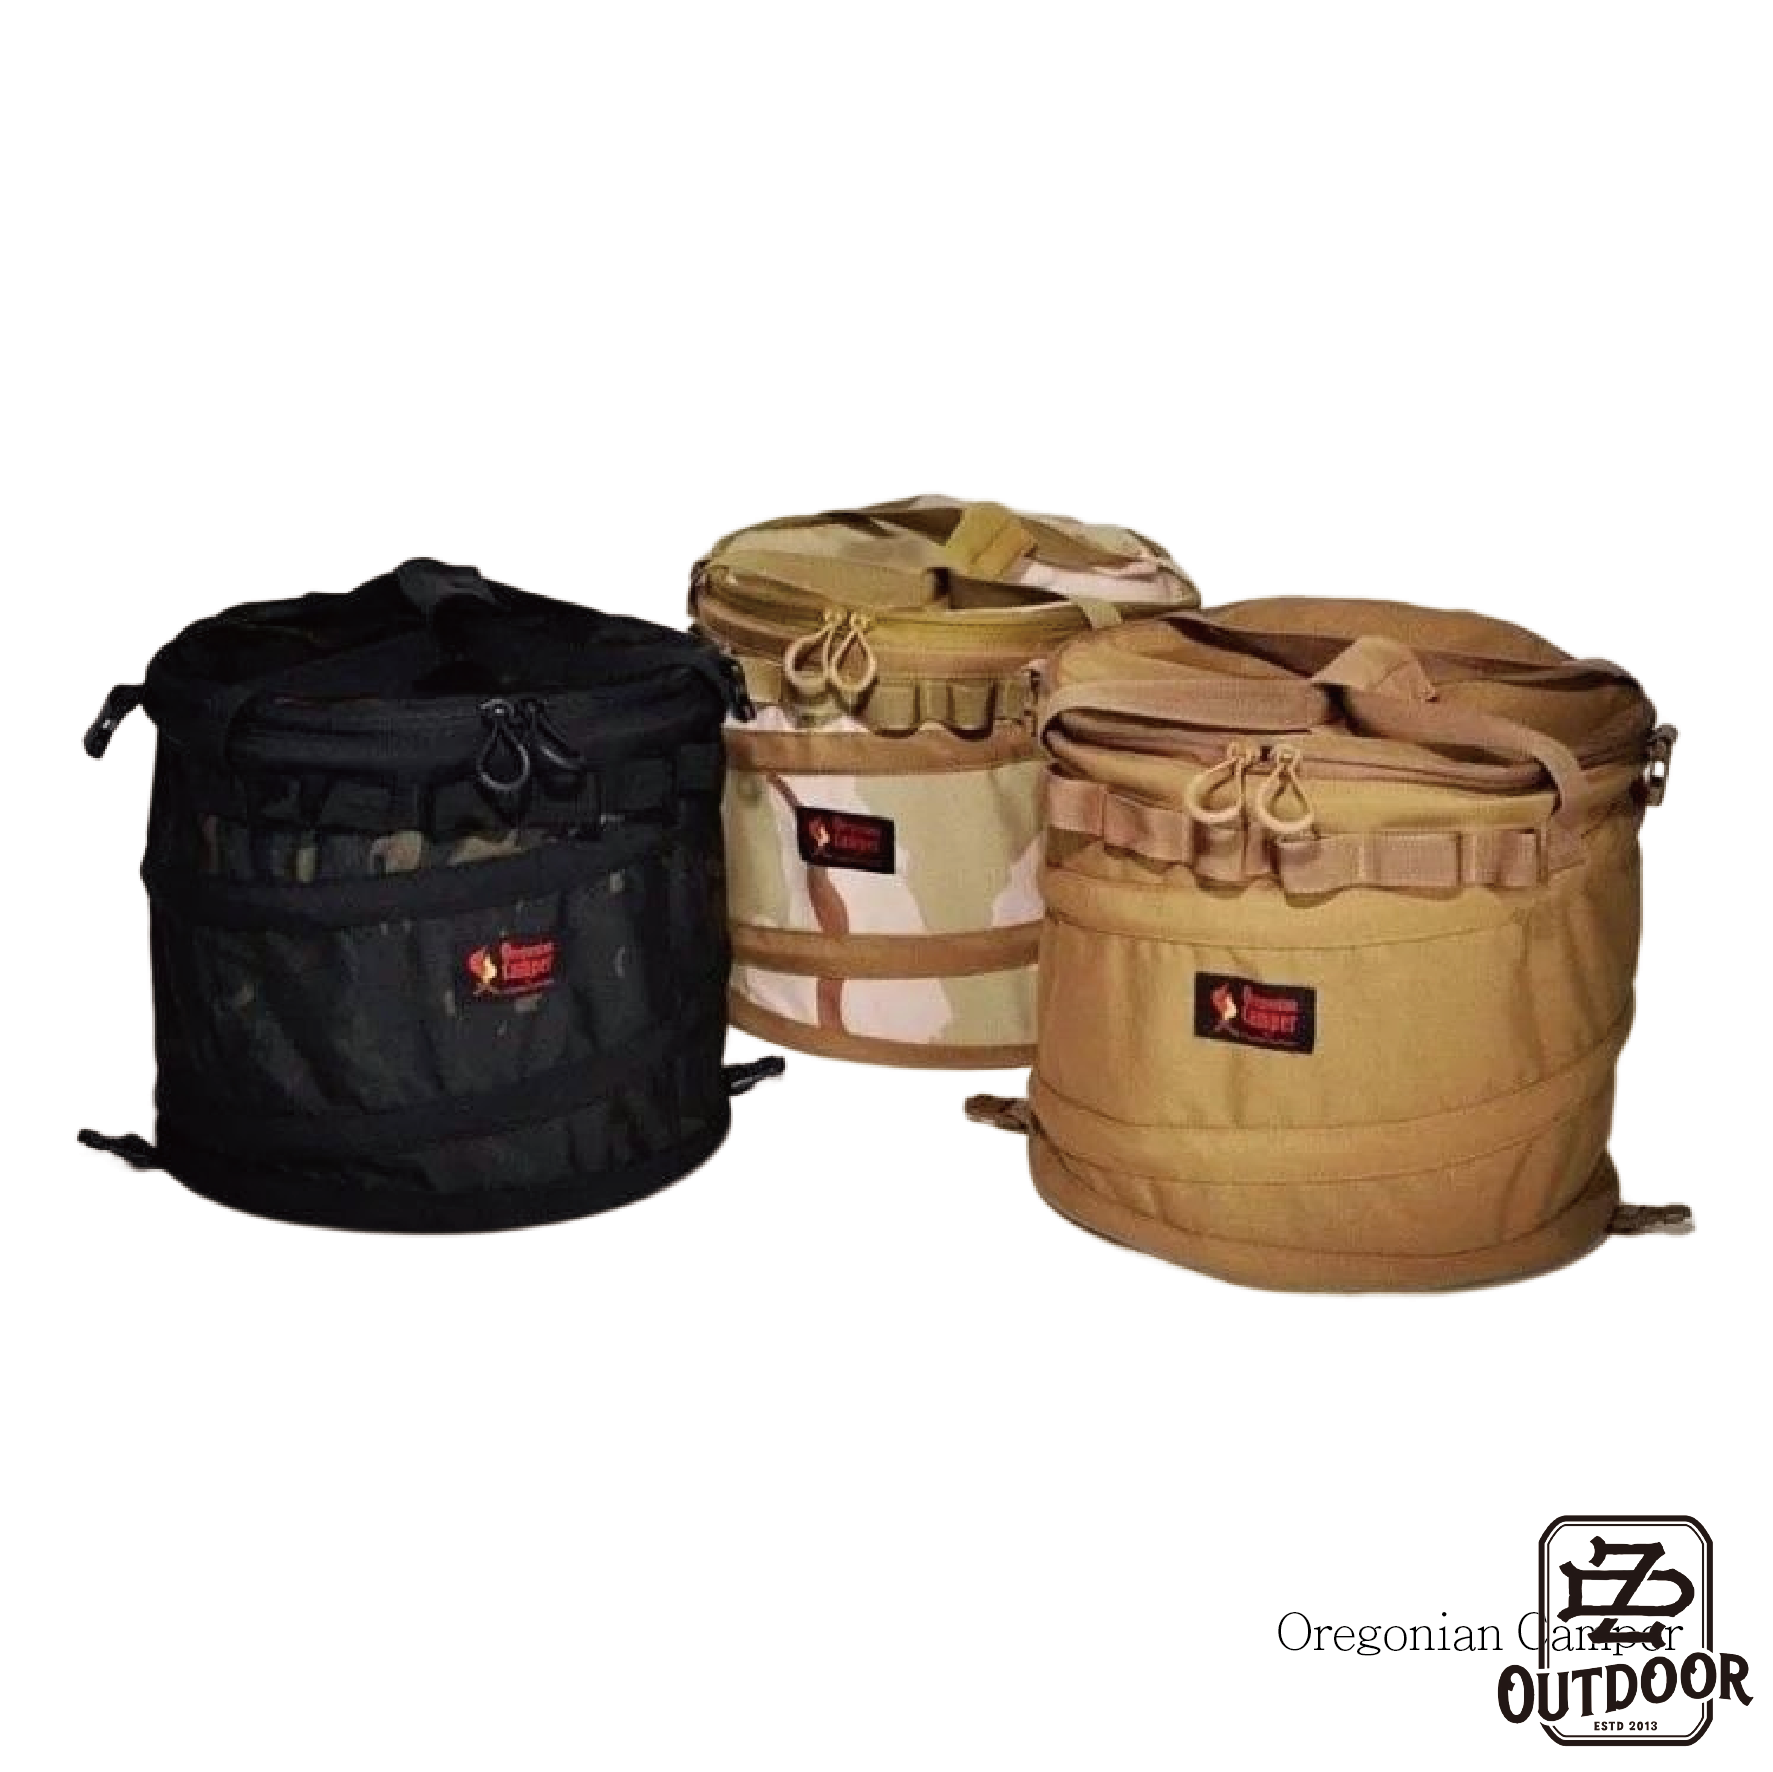 Oregonian Camper 戰術彈簧桶(小) 垃圾桶 圓型收納袋【ZD Outdoor】 露營風格